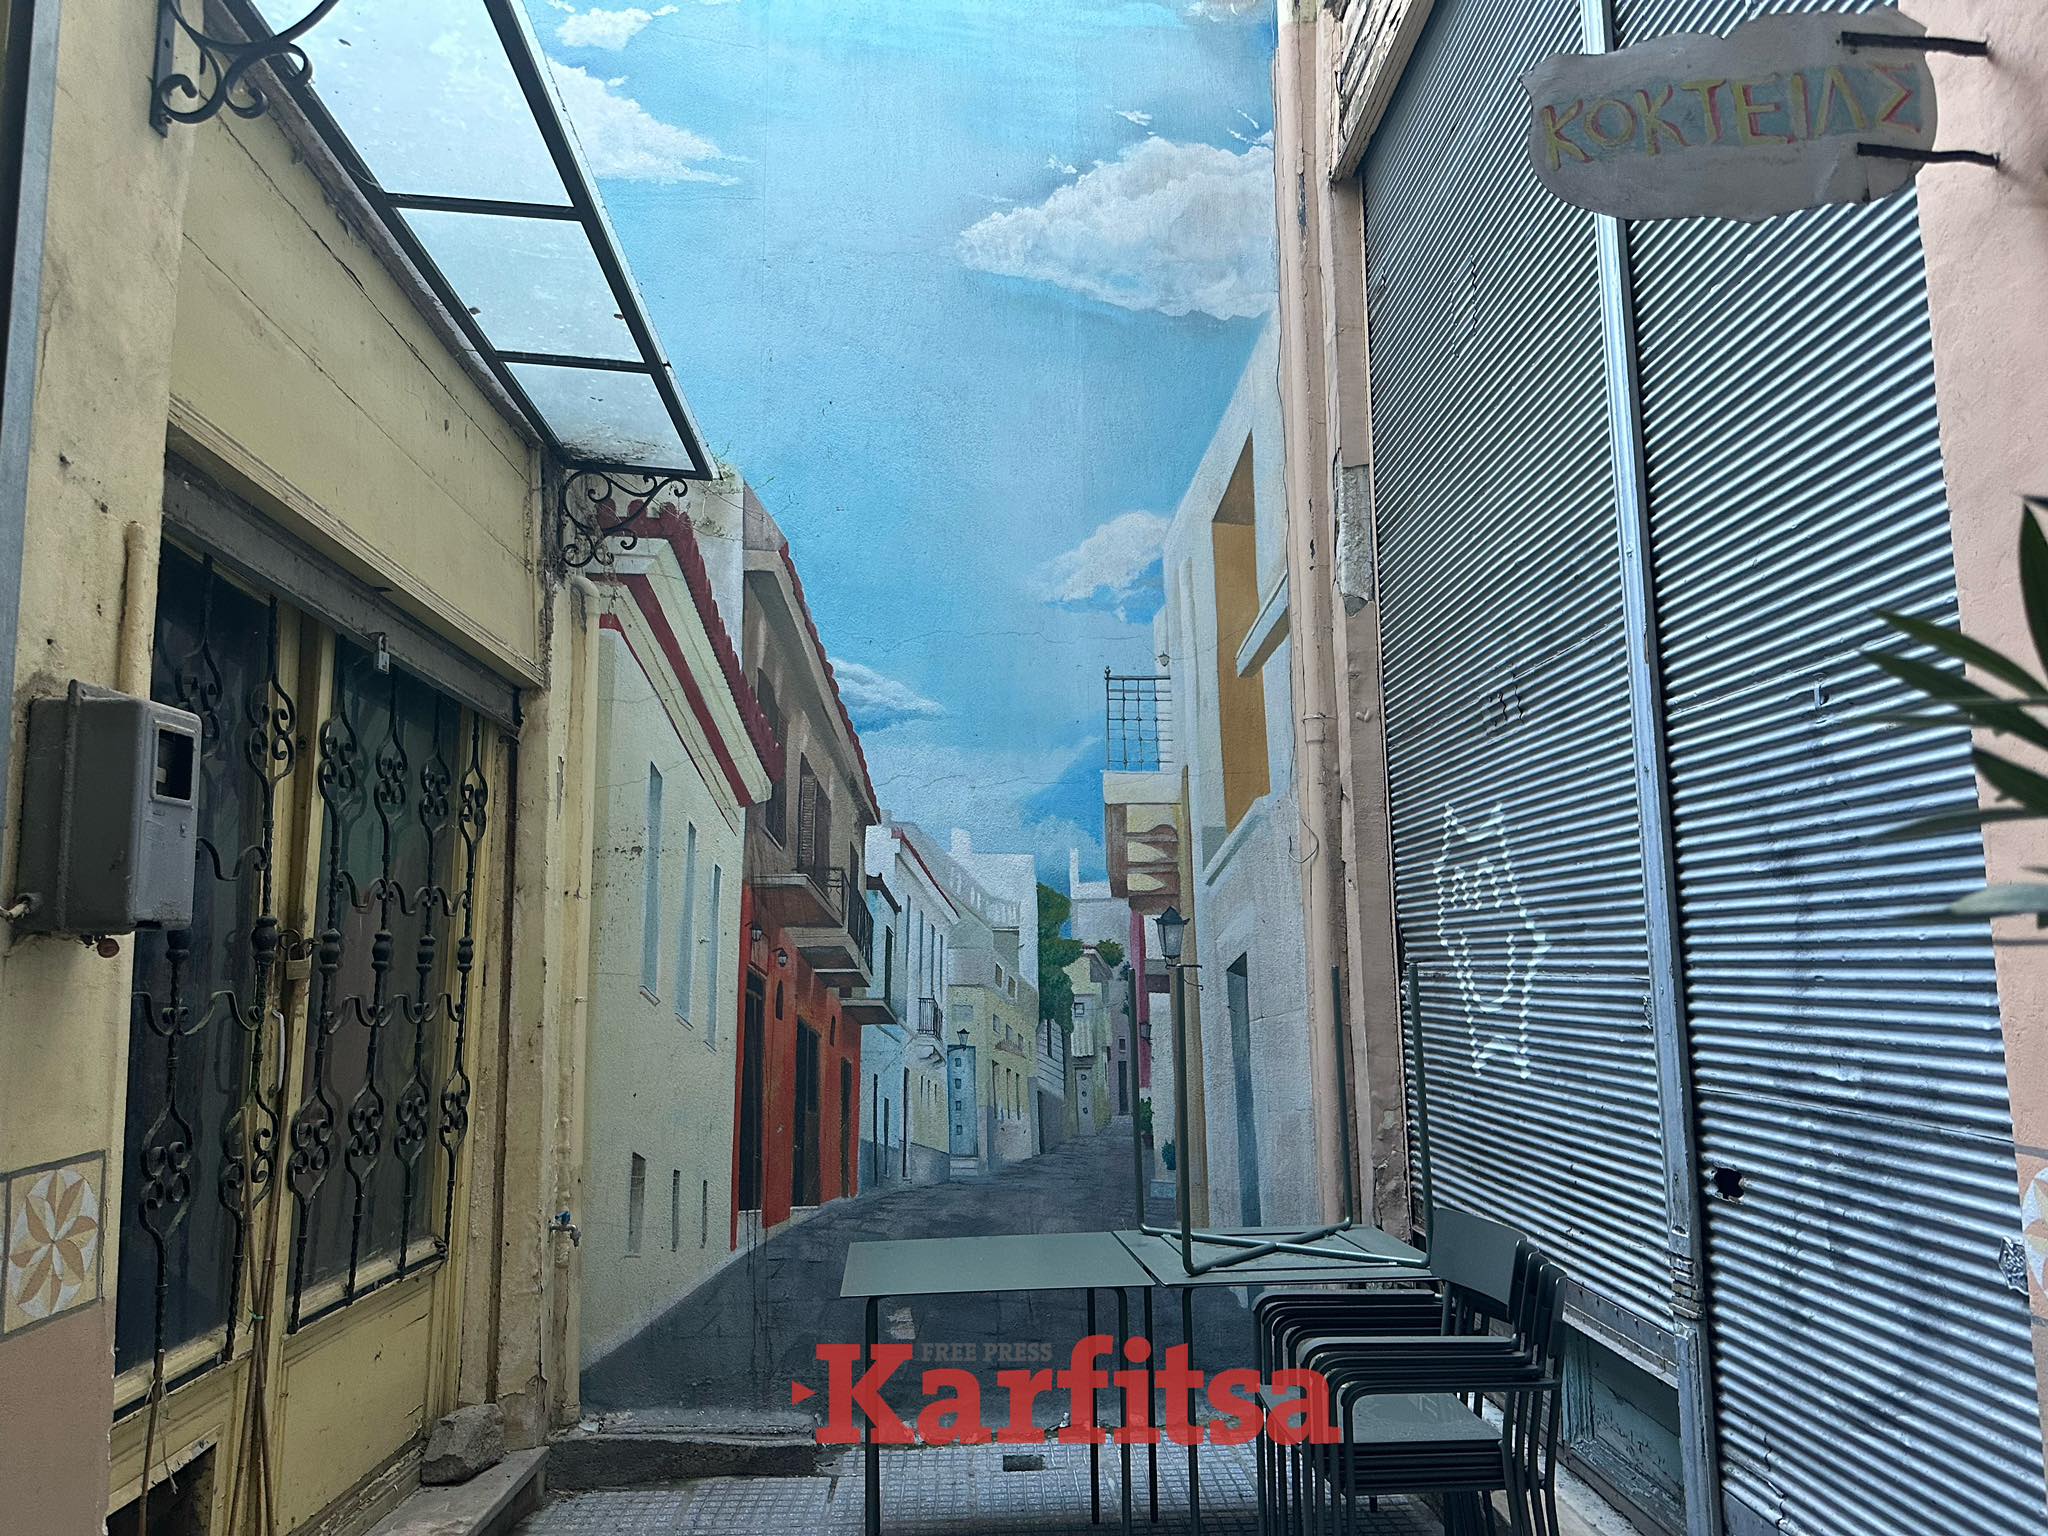 Streets of SKG: Ένα σοκάκι μέσα σε ένα άλλο… σοκάκι – Η τοιχογραφία στη Θεσσαλονίκη που «ξεγελάει» (ΦΩΤΟ+ Video)